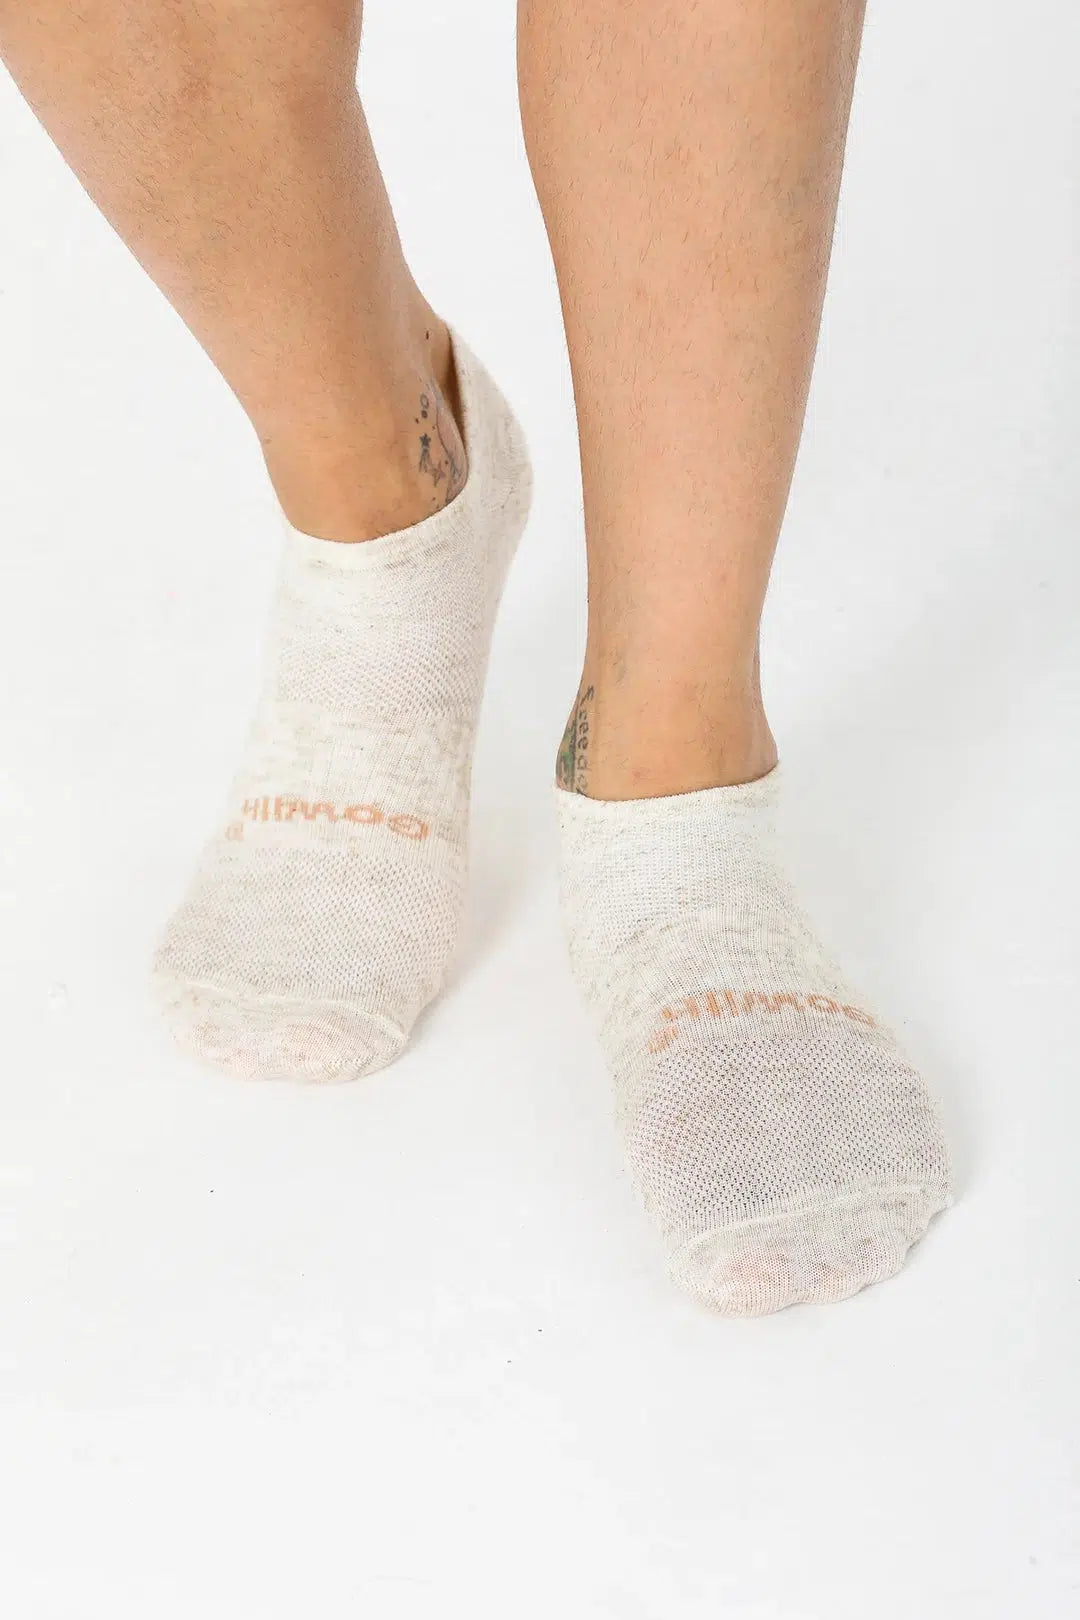 GoWith-men-low-cut-linen-socks